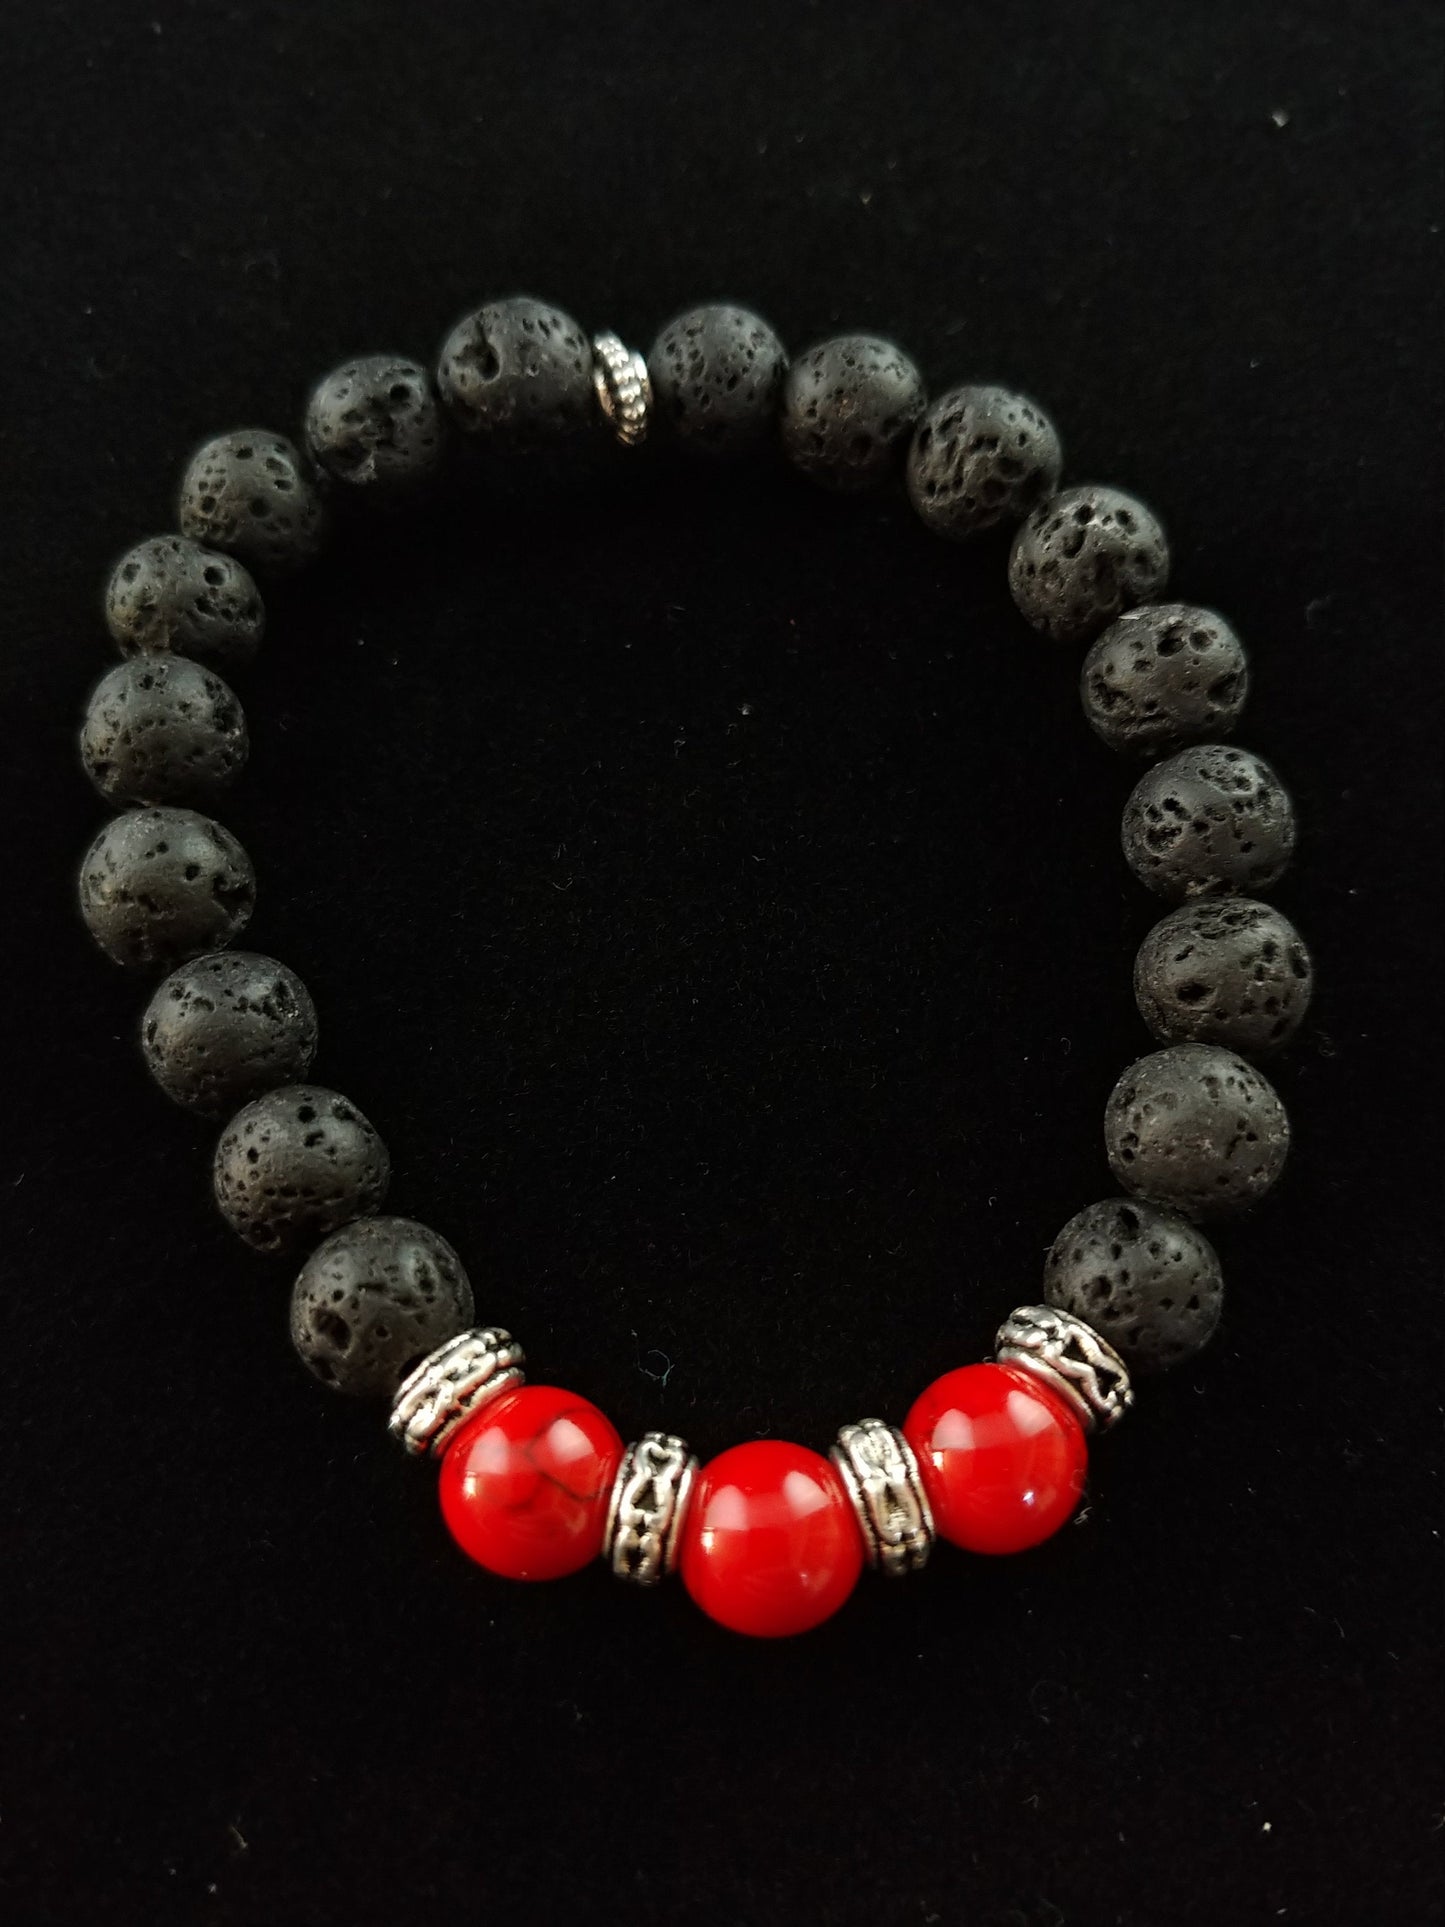 Volcano Fire Bracelet - Handmade Lava Bracelet with Dyed Turquoise Red Gemstone Beads - Handmade in Iceland